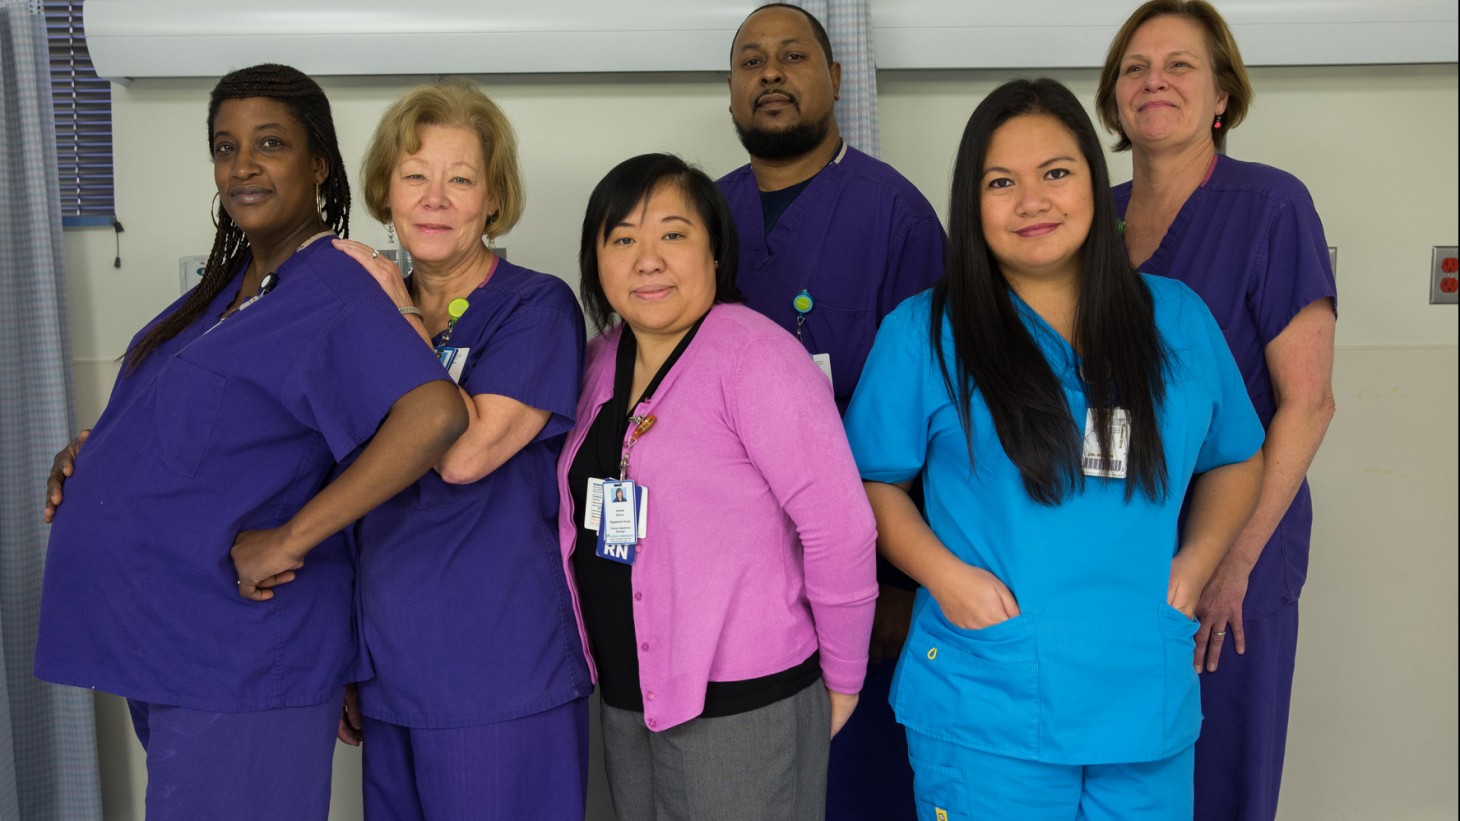 The endoscopy unit-based team at KP's Falls Church facility